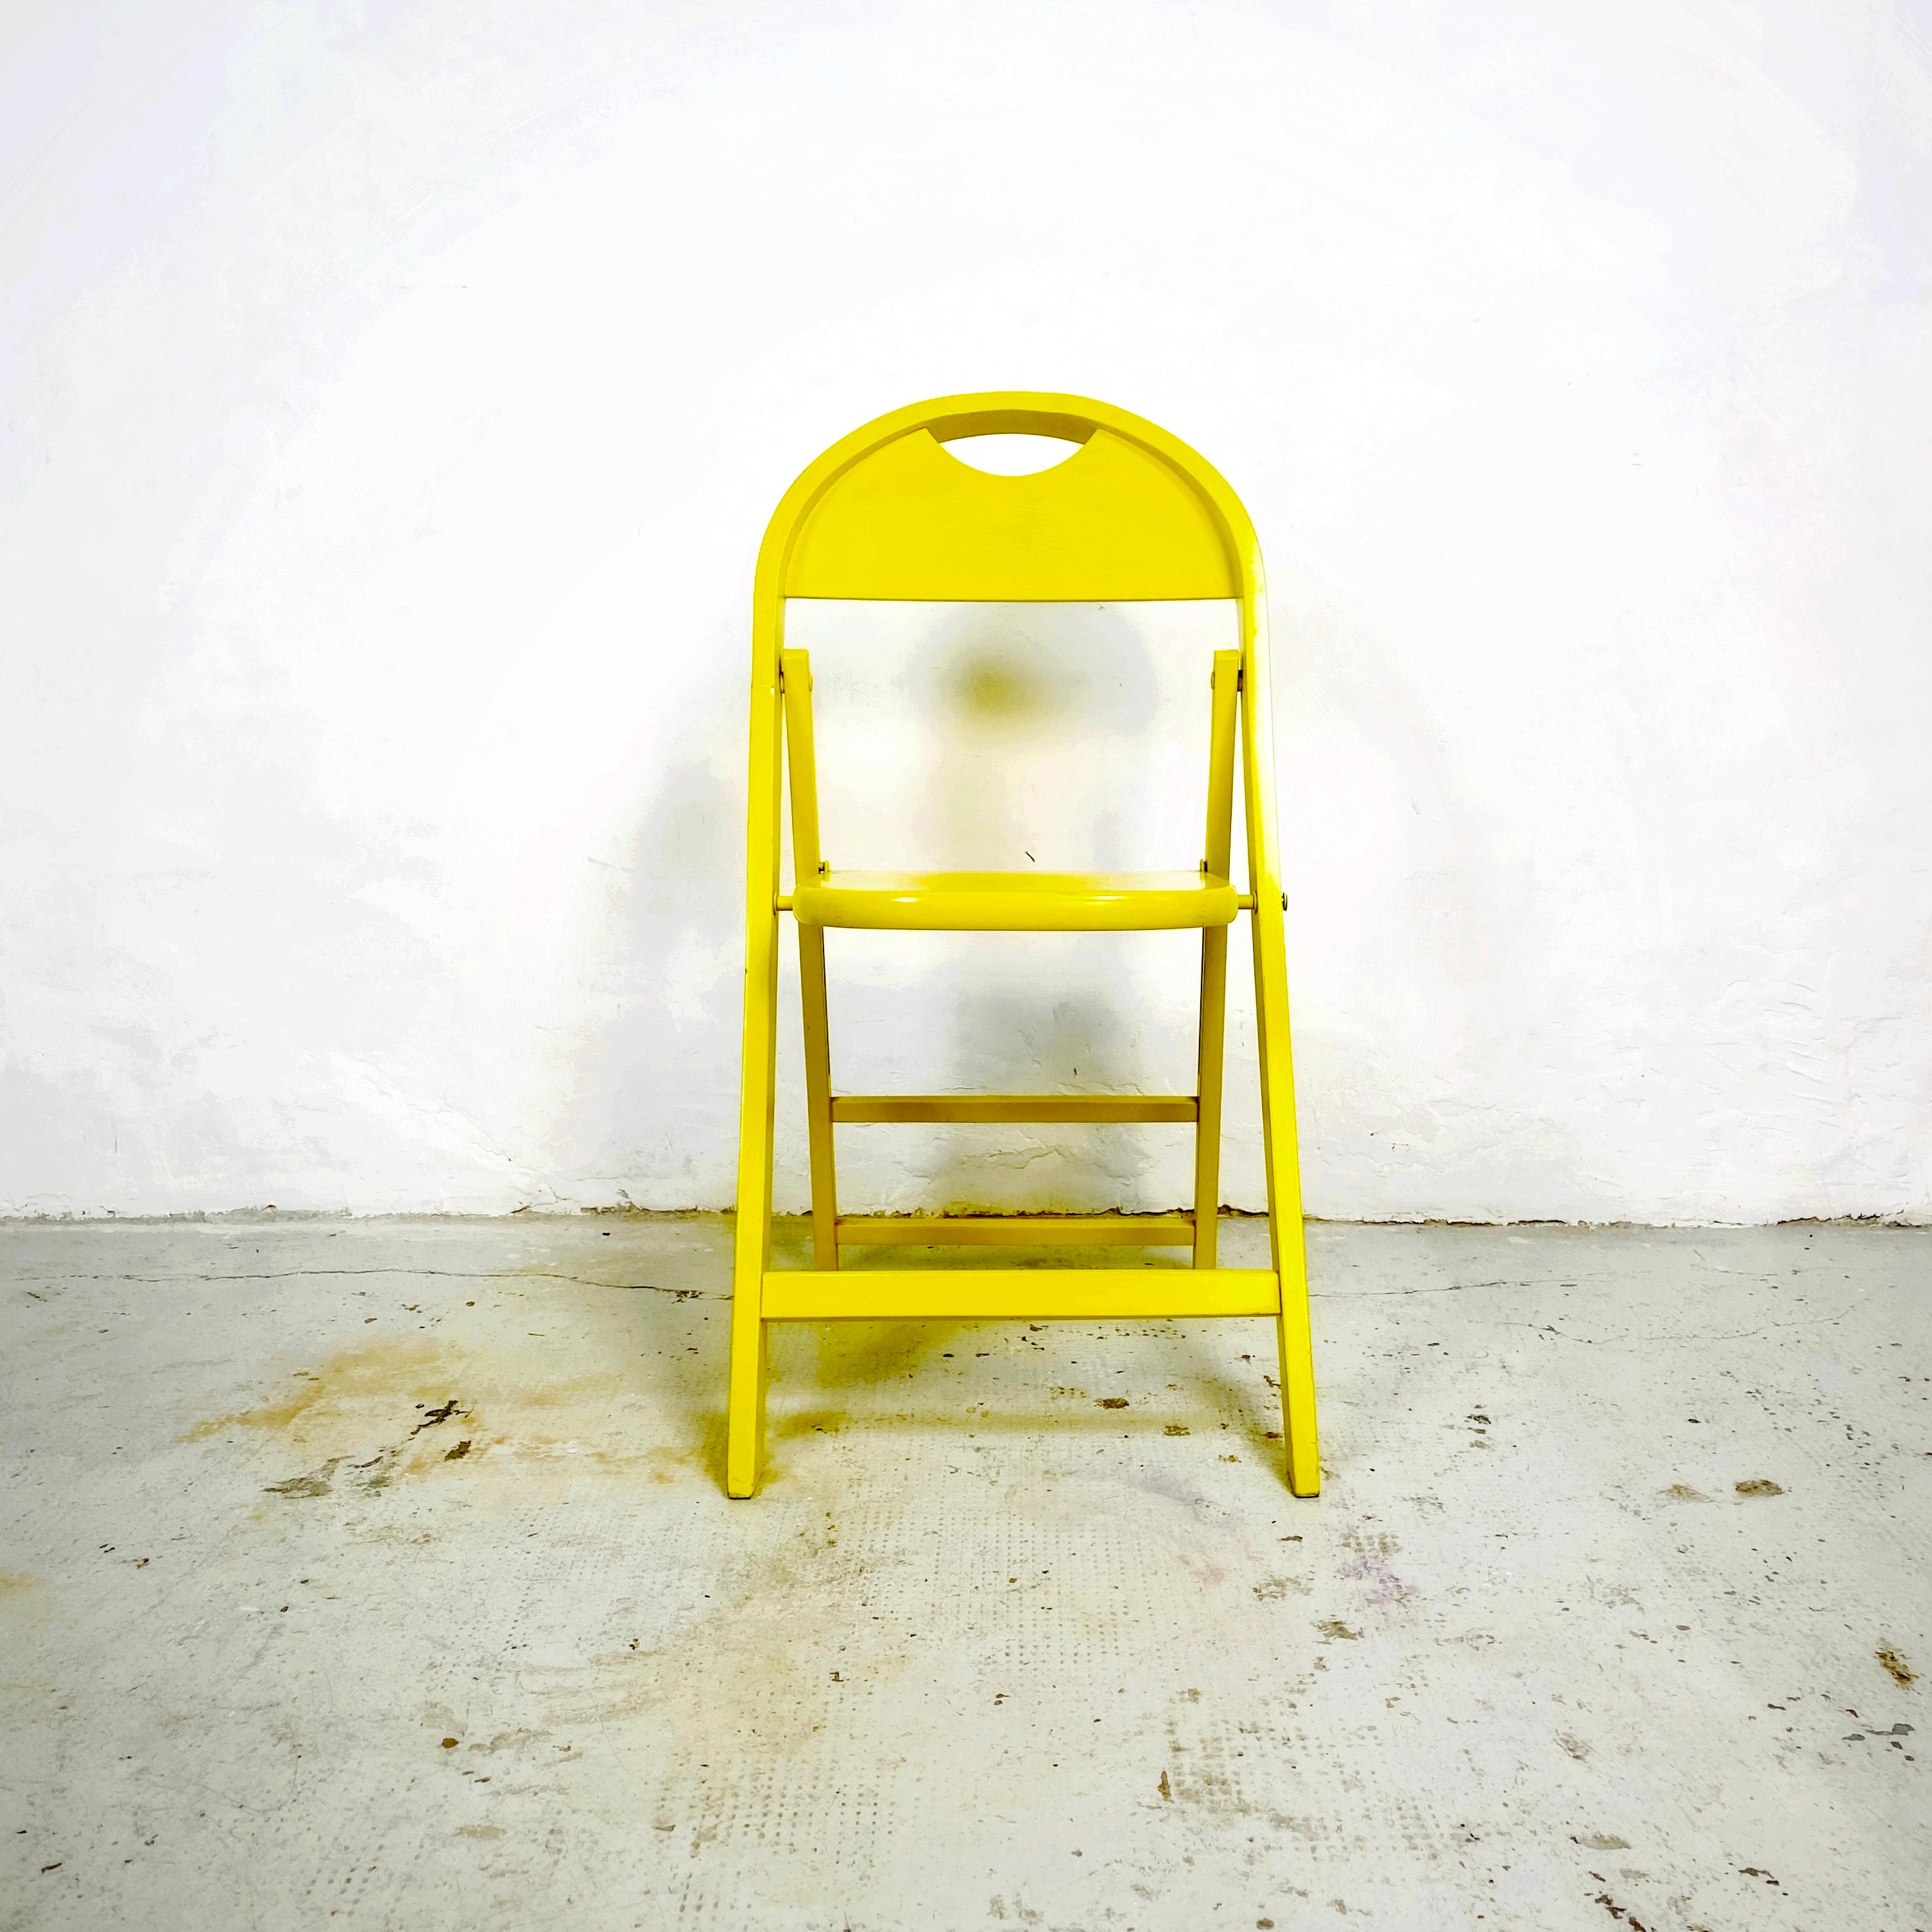 Late 20th Century Italian Mid-Century Modern Tric Yellow Folding Chair by A. Castiglioni, 1970s